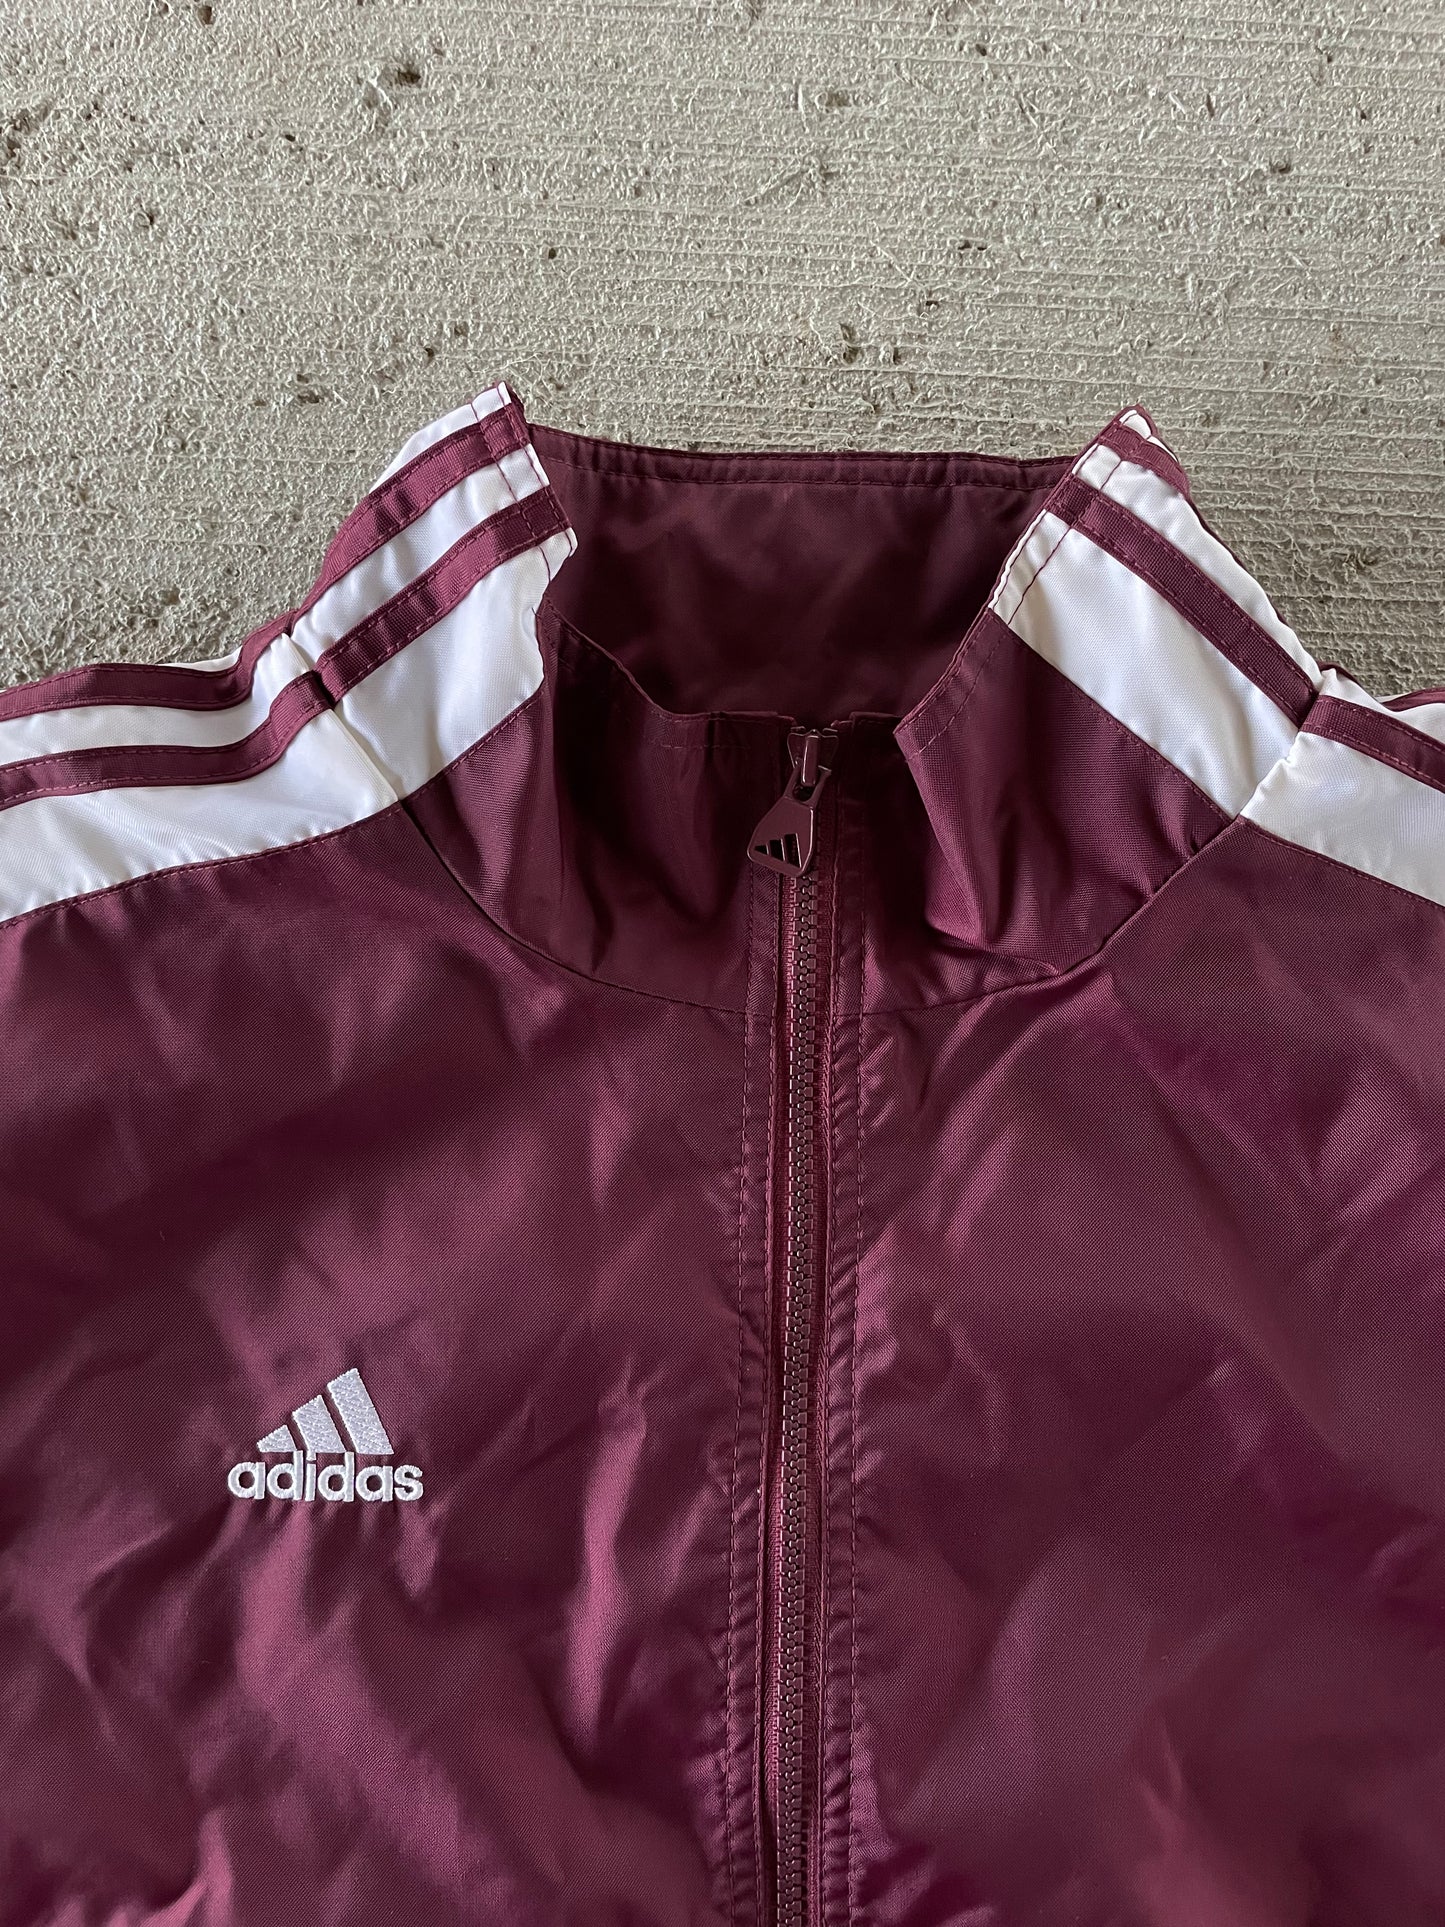 2001 Adidas Jacket